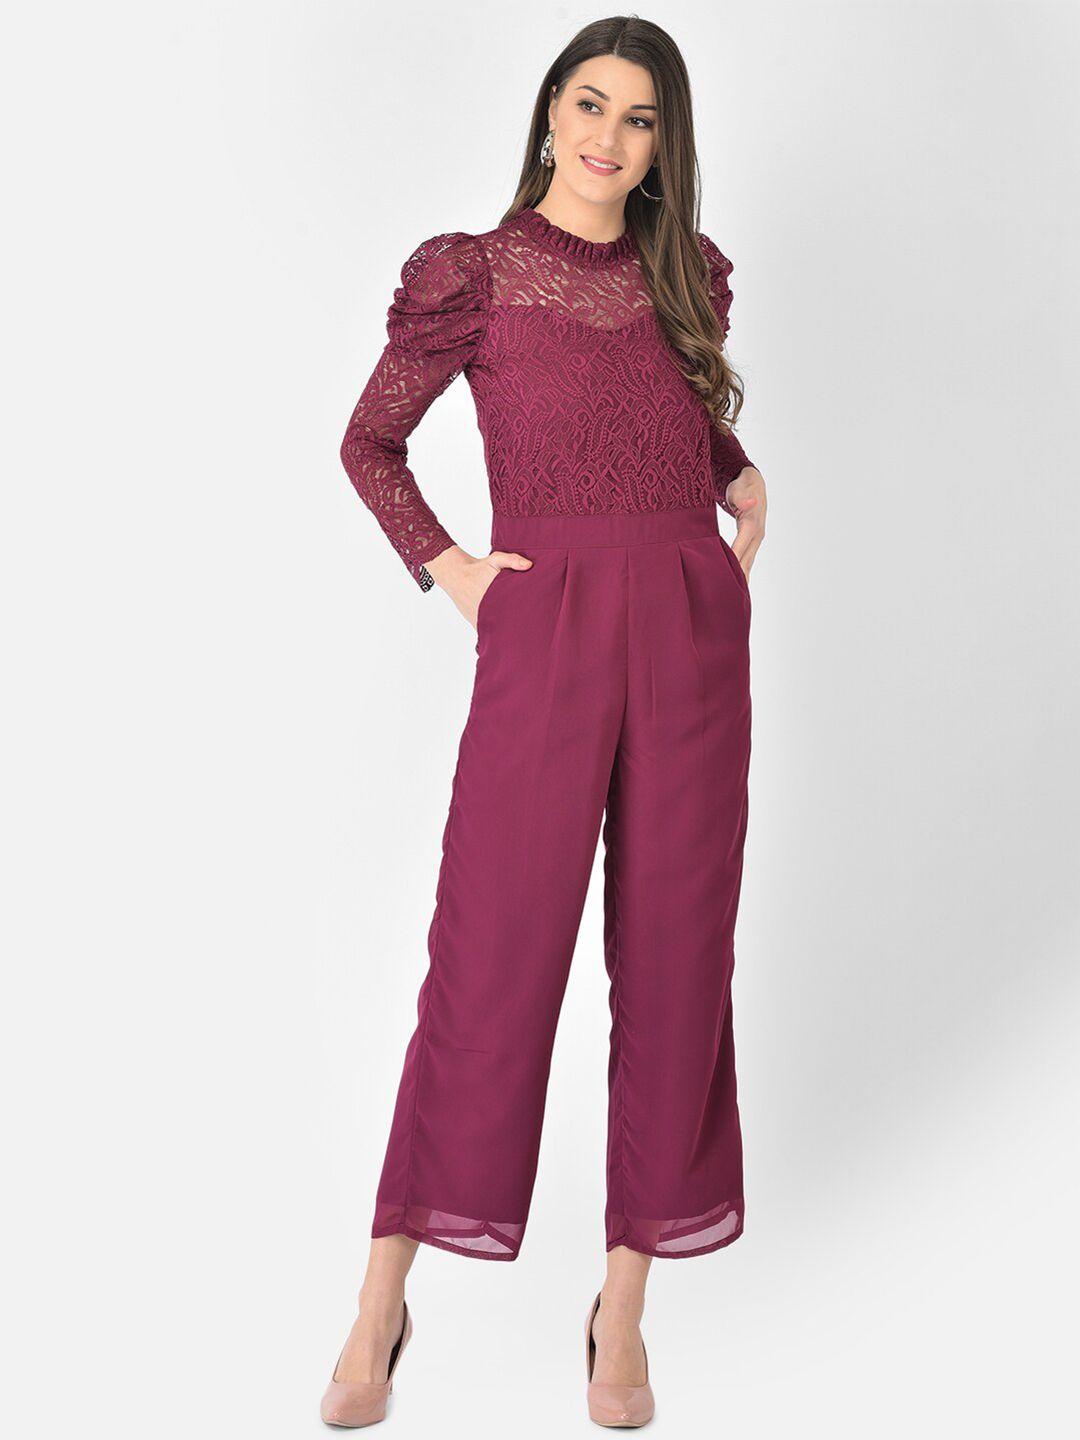 eavan burgundy basic jumpsuit with lace inserts